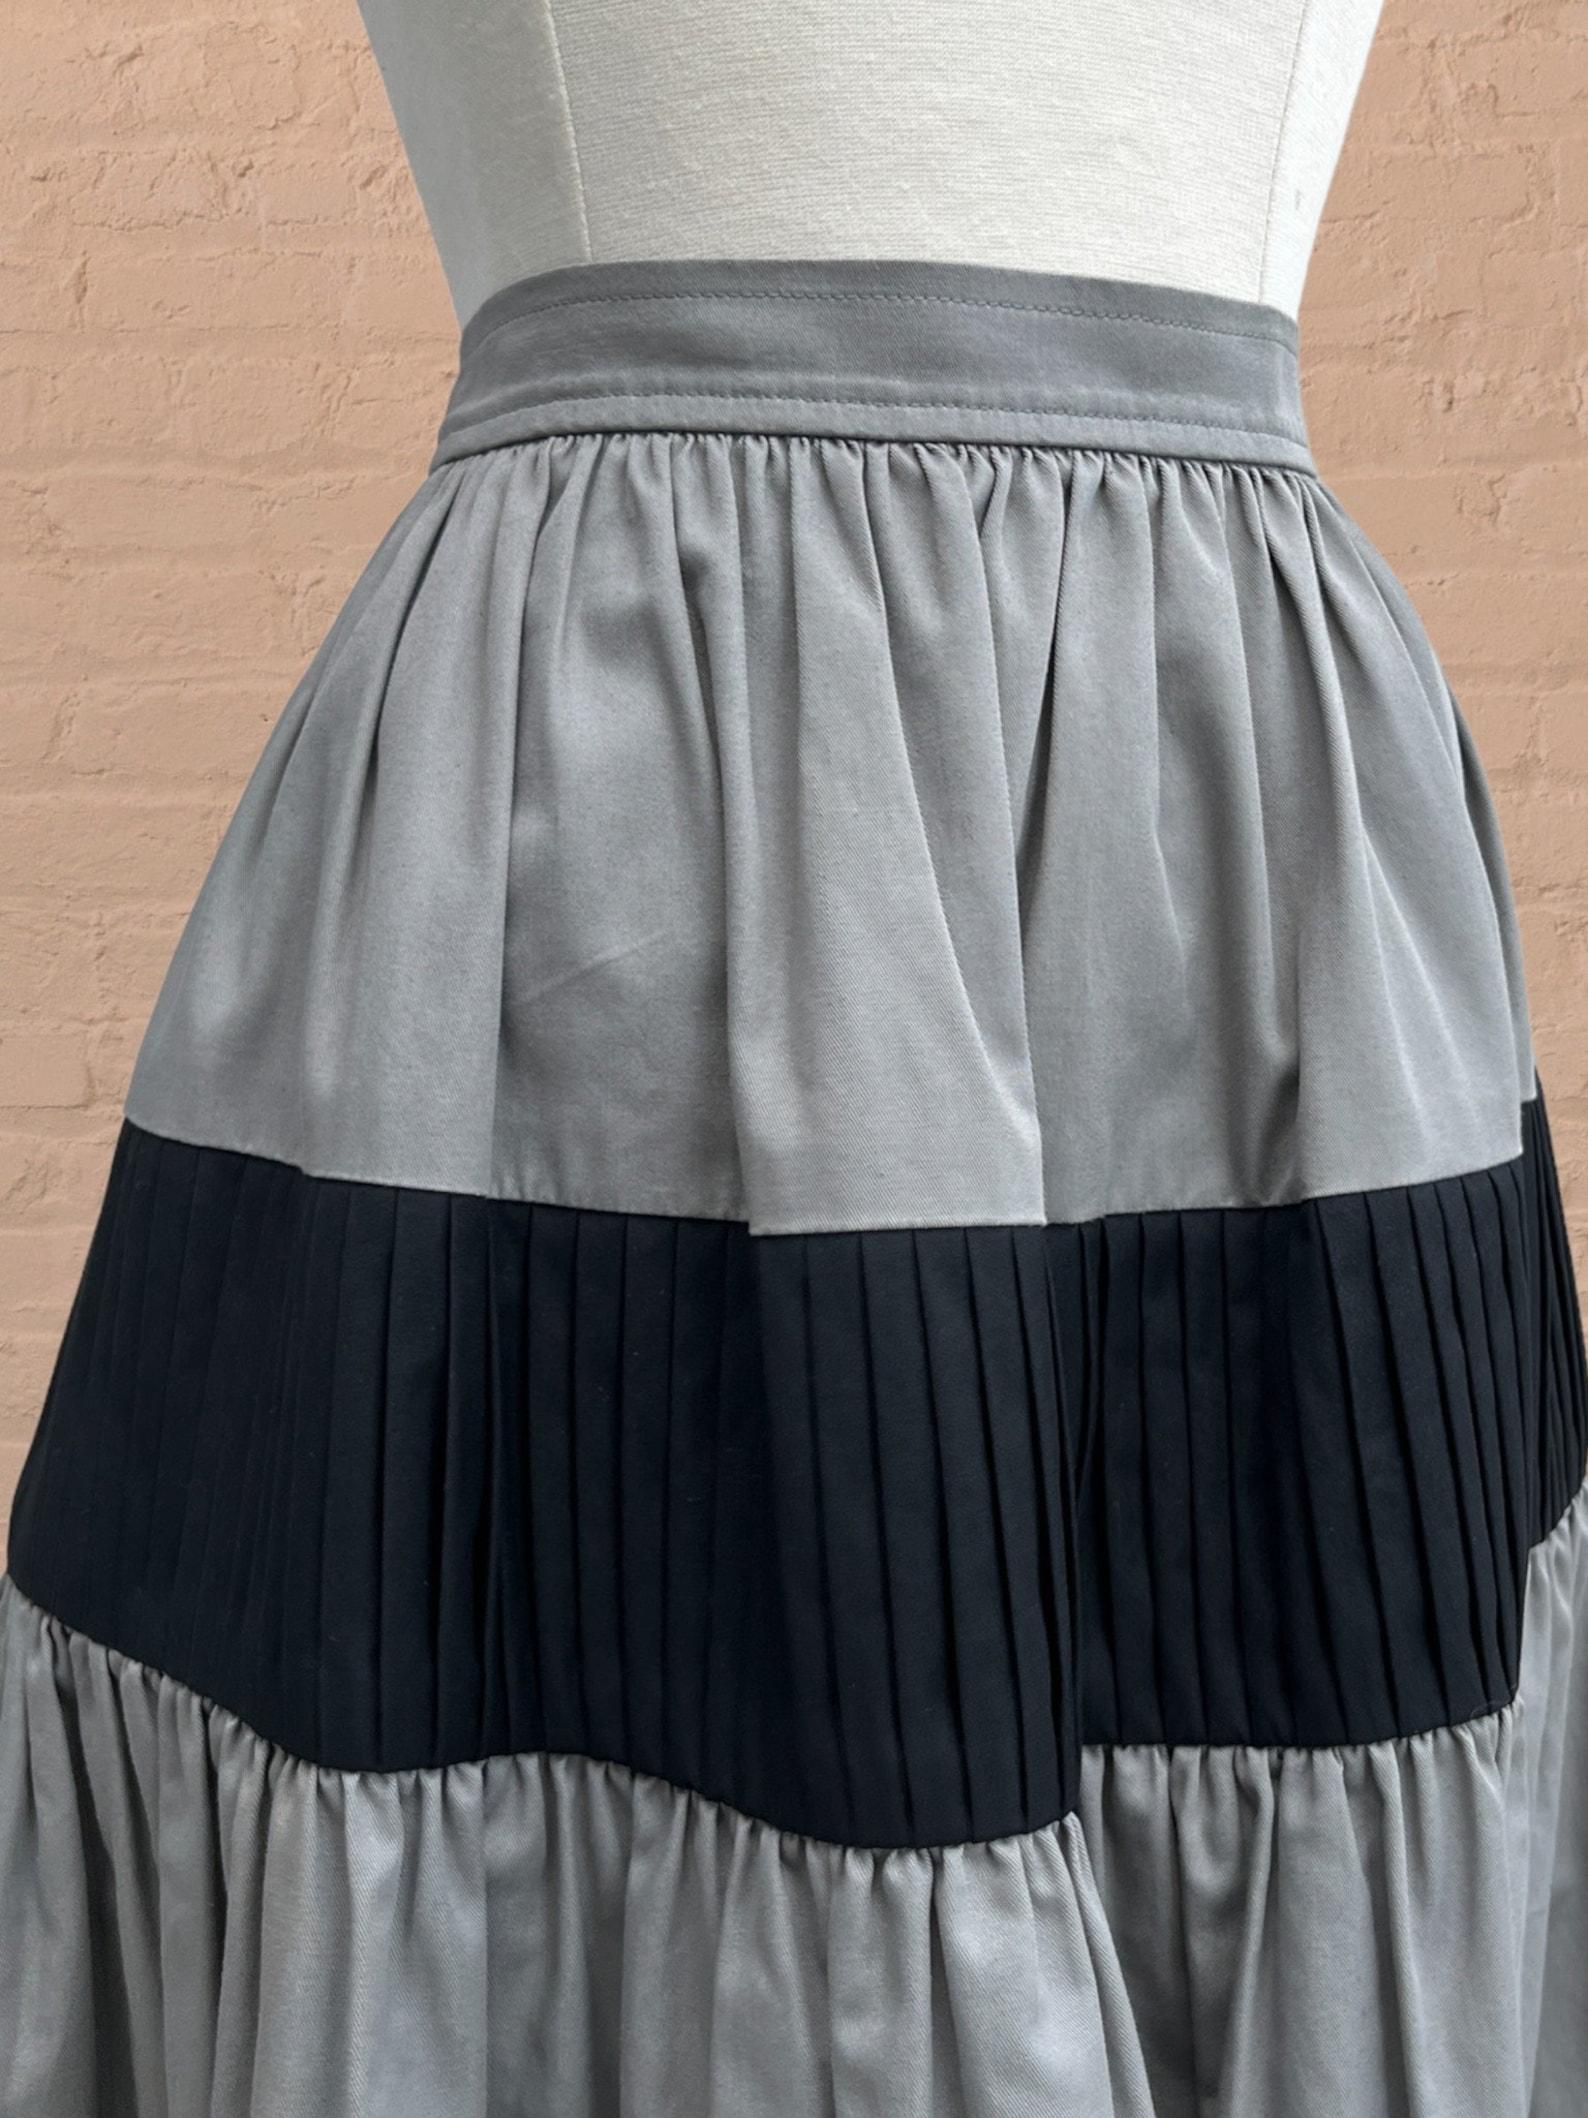 Yves Saint Laurent Colorblock Skirt, Circa 1980s For Sale 1